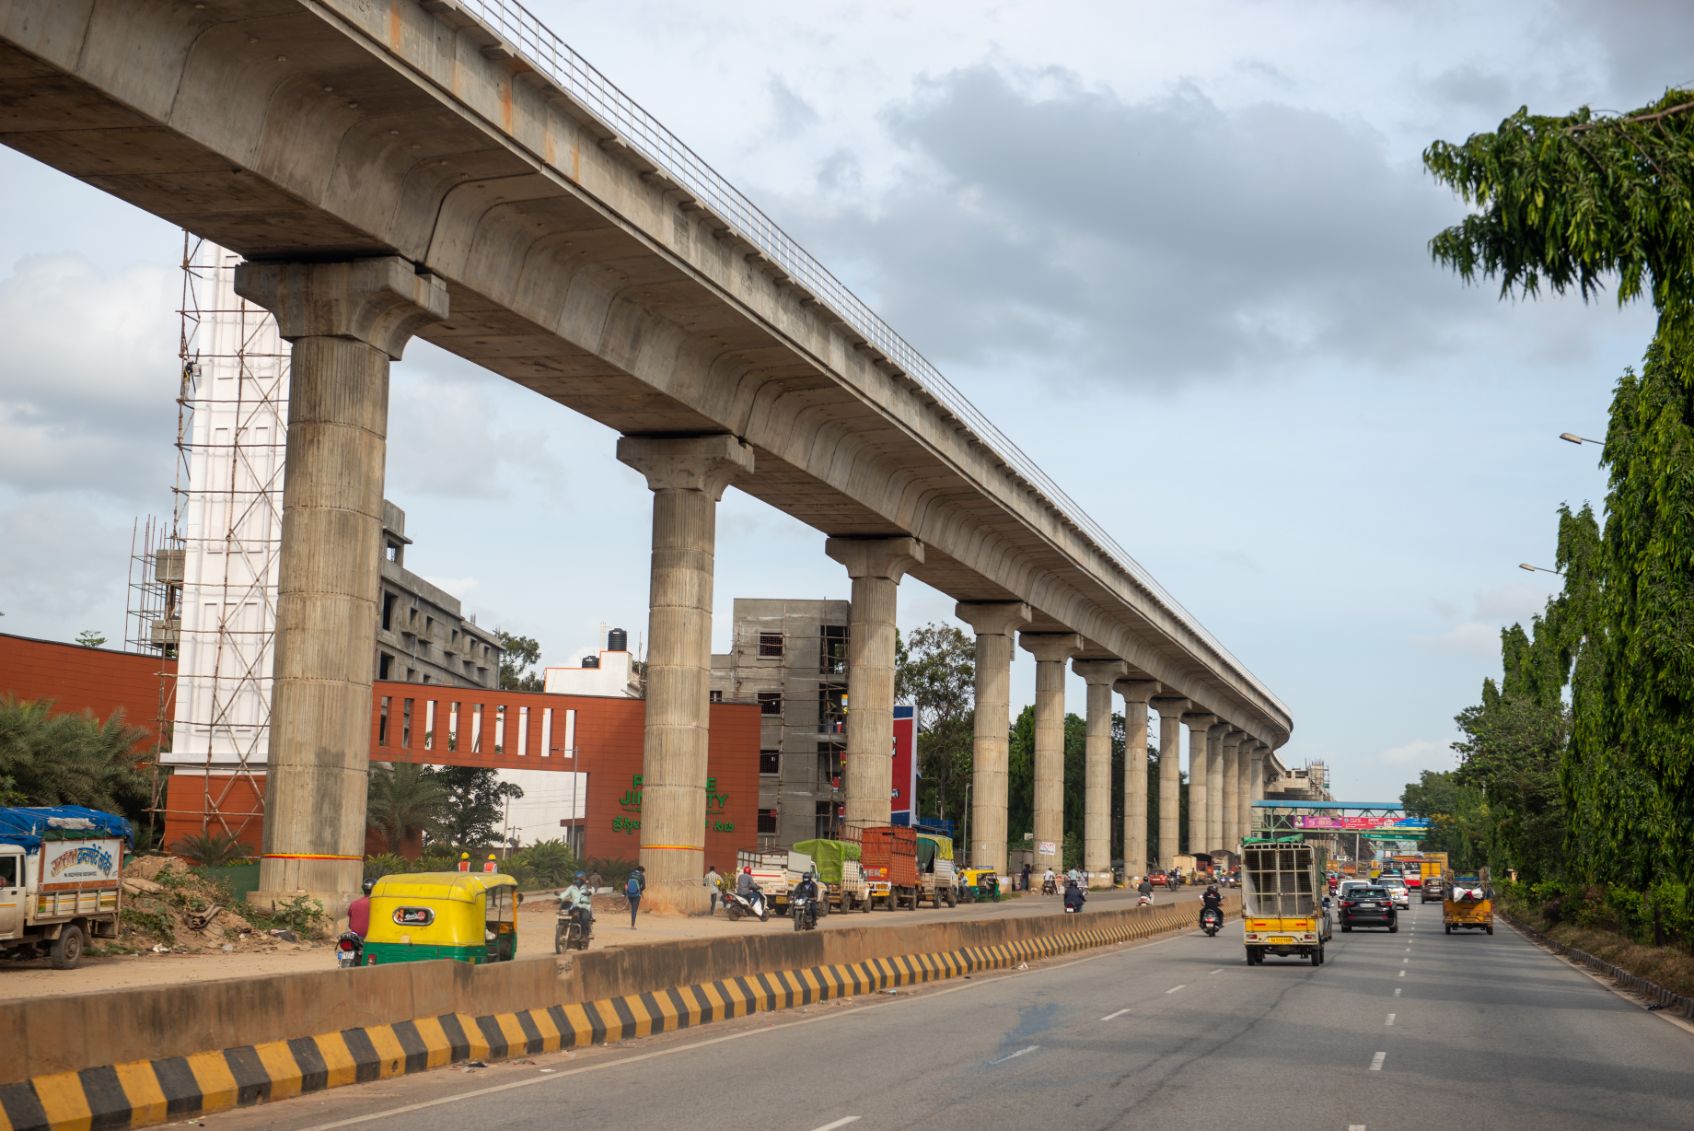 Namma Metro Pink Line Bangalore Route Status And More